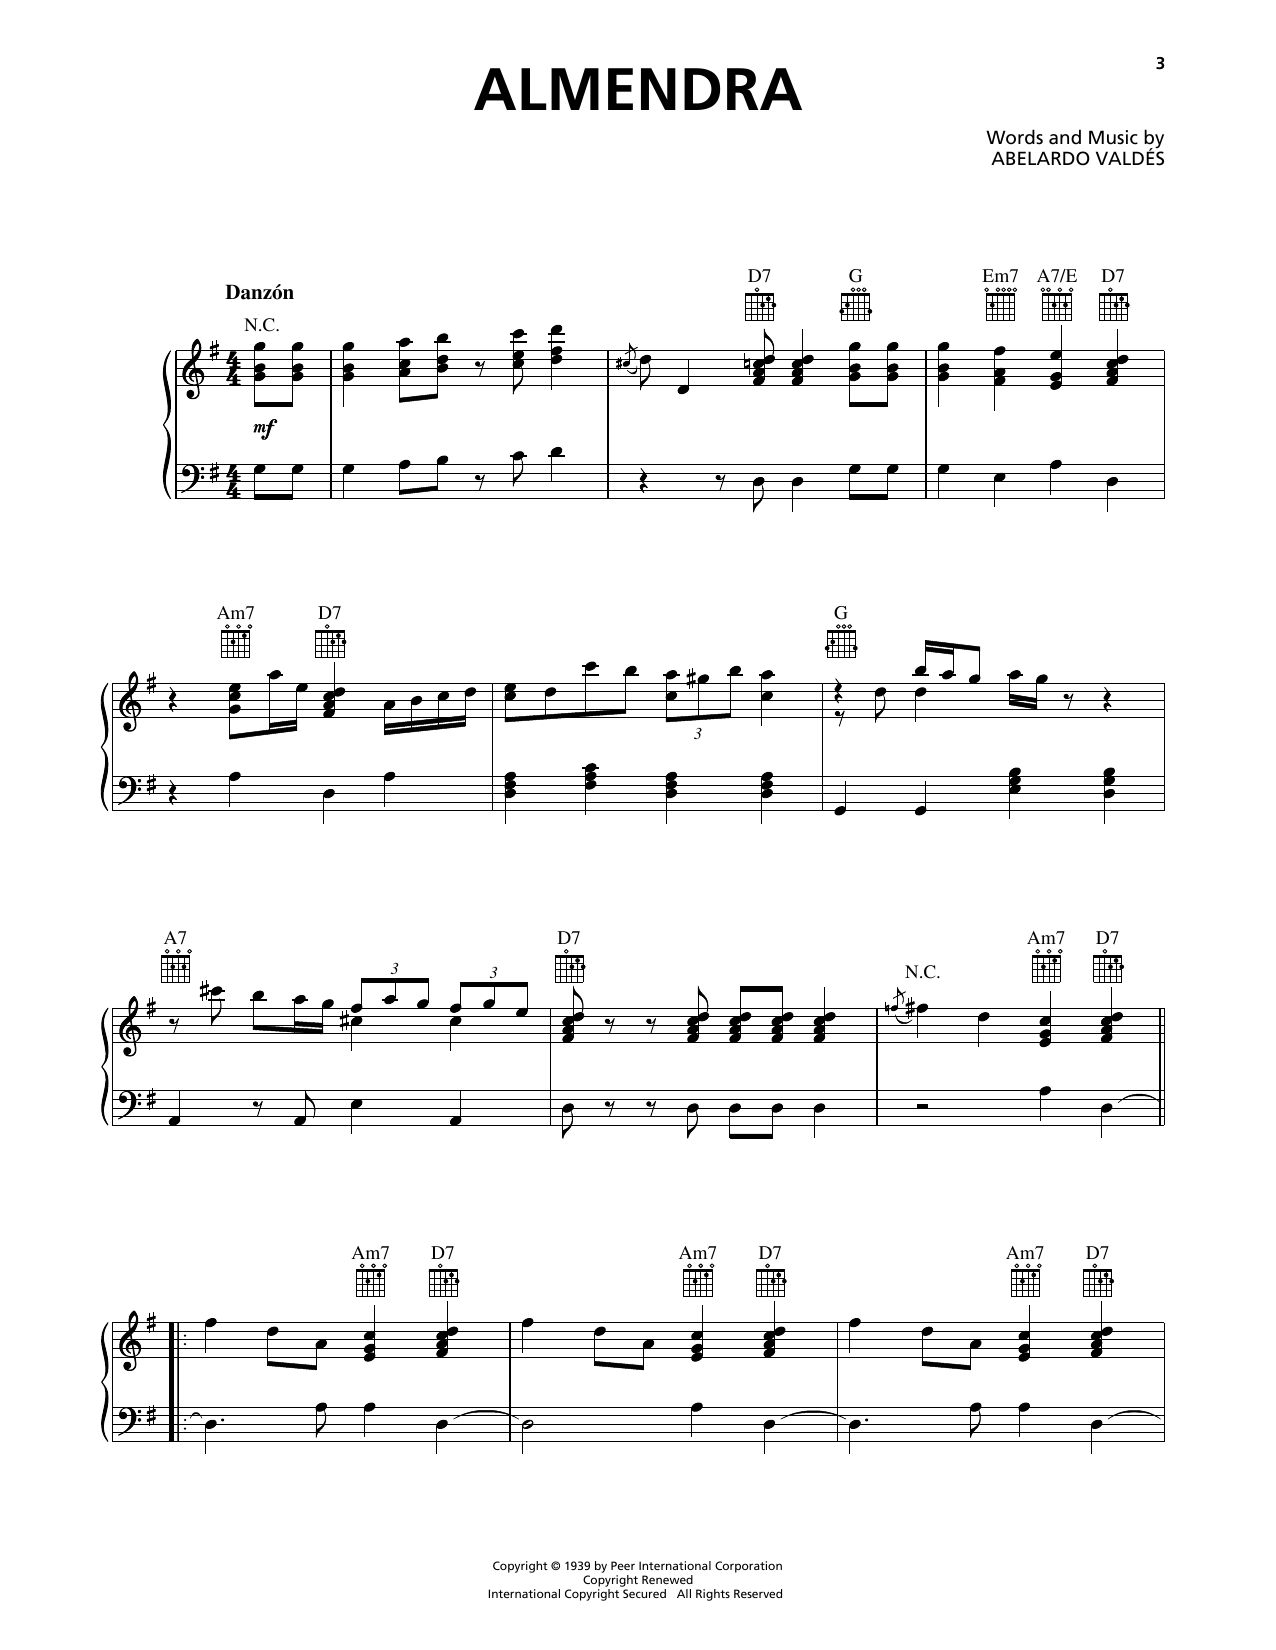 Download Orquesta Aragon Almendra Sheet Music and learn how to play Piano Solo PDF digital score in minutes